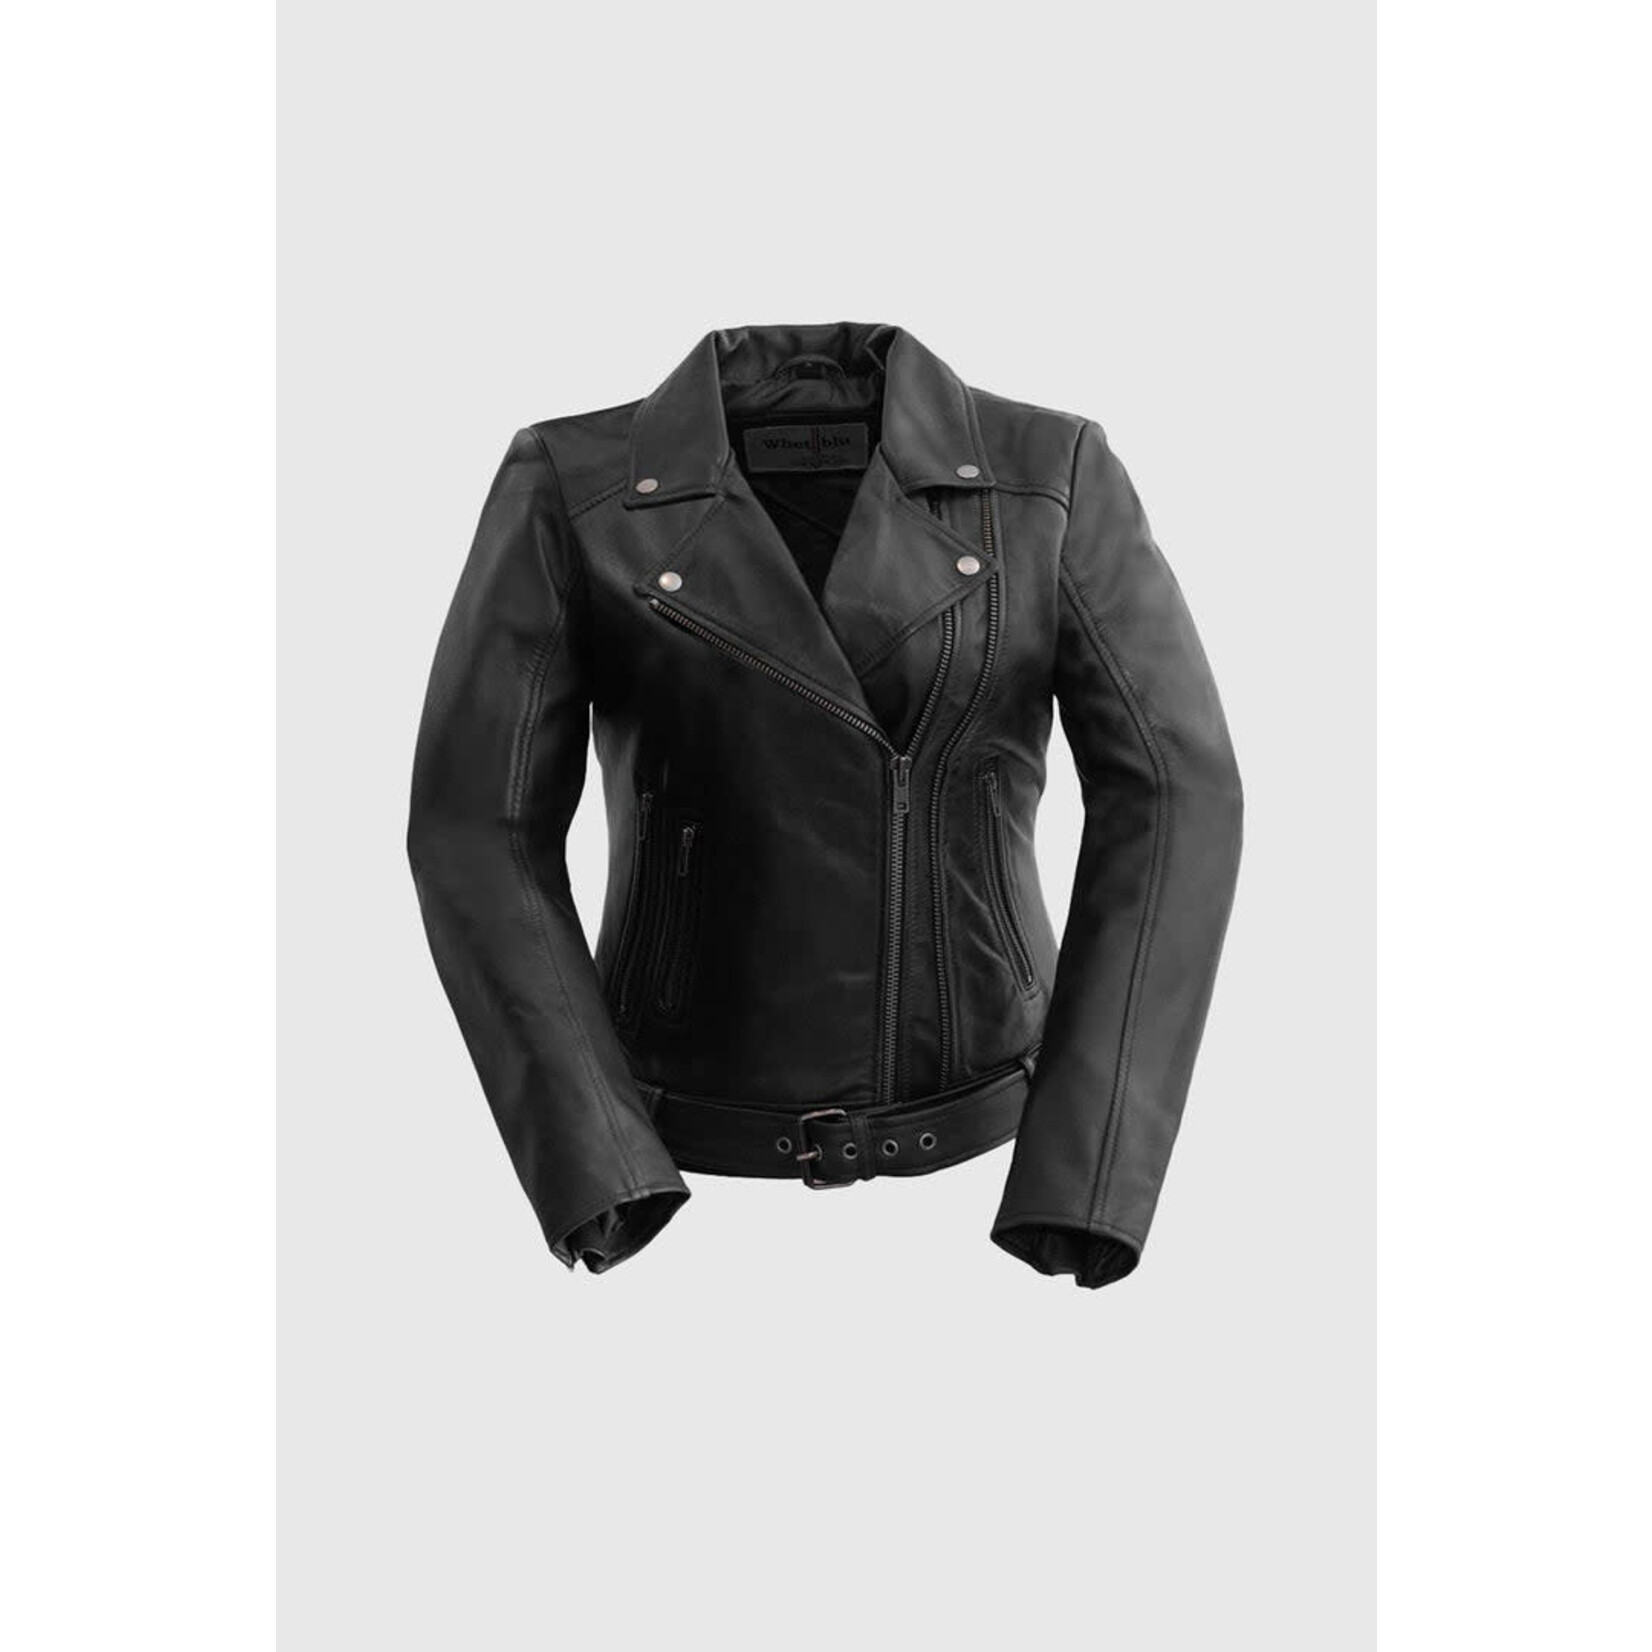 Whet Blu Chloe Womens Fashion Motorcycle Leather Jacket in Black